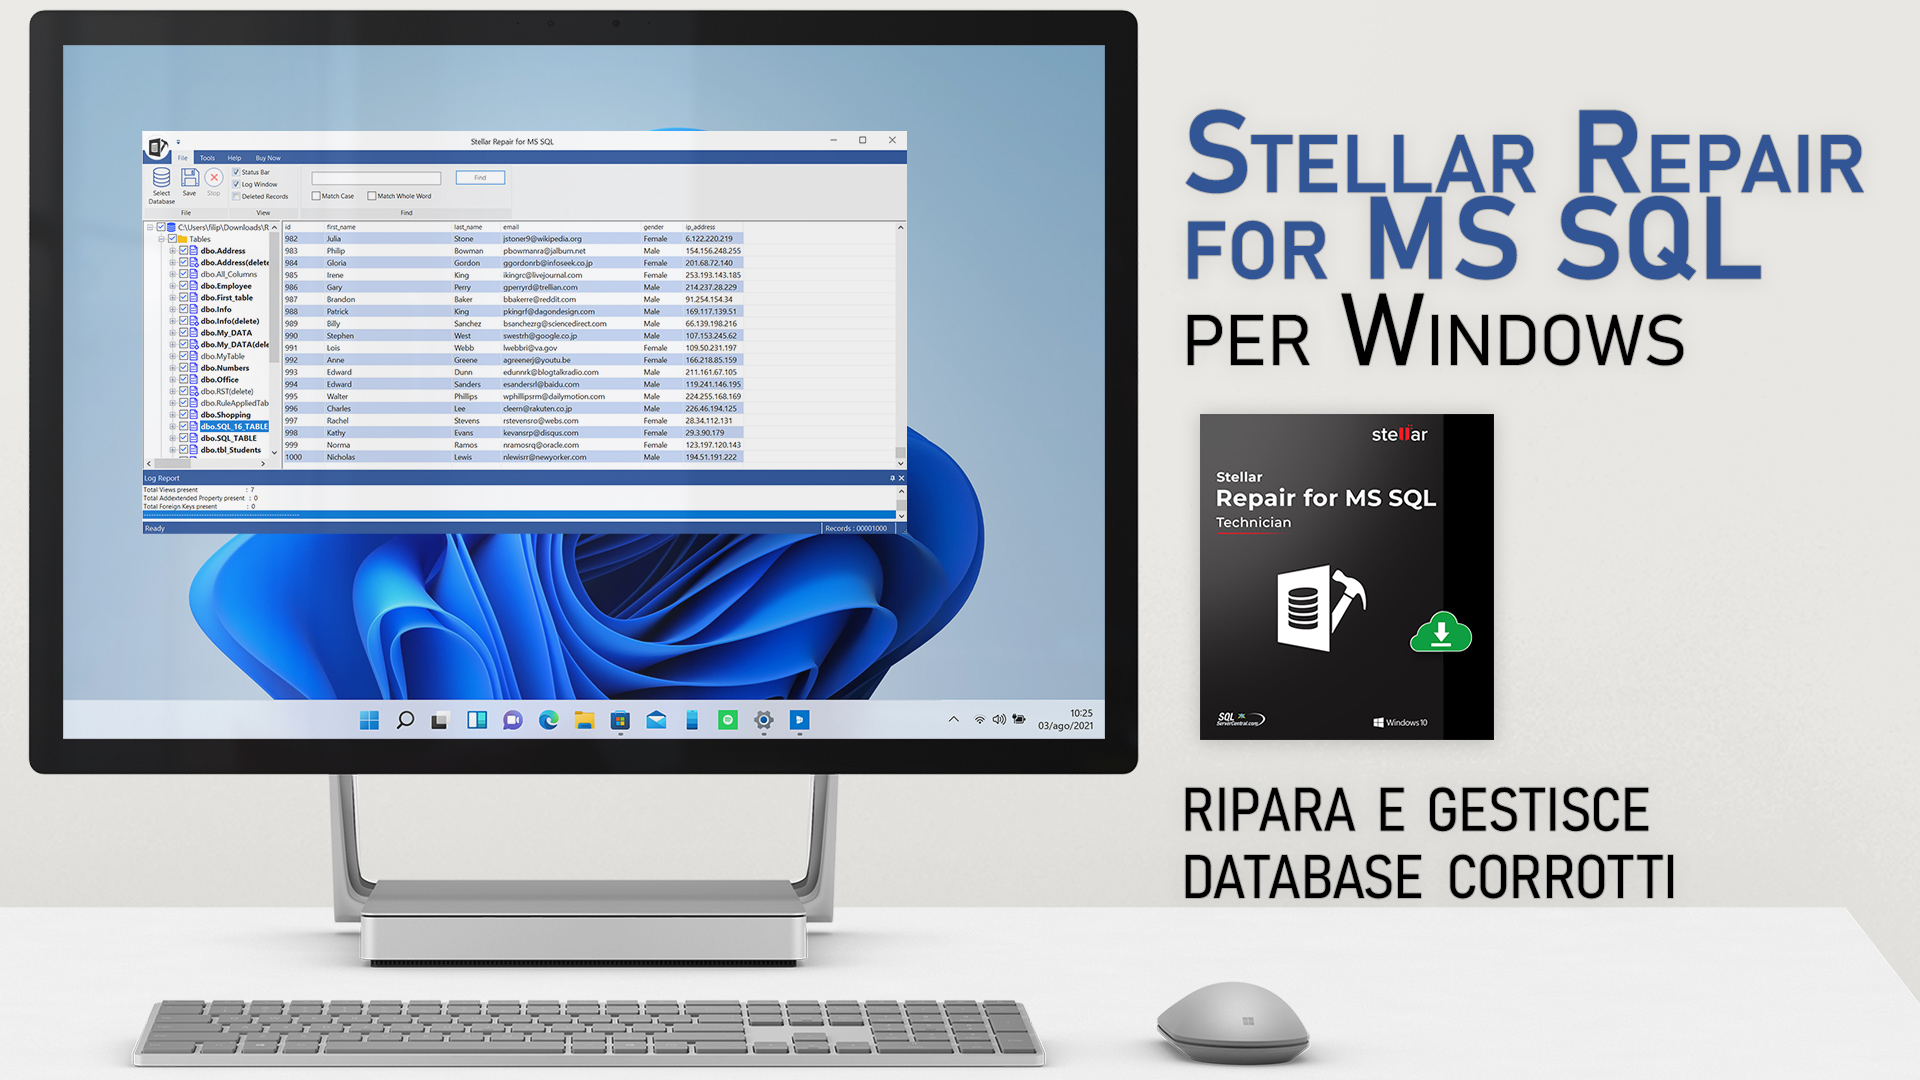 Stellar Repair for MS SQL per Windows - Ripara e gestisce database corrotti